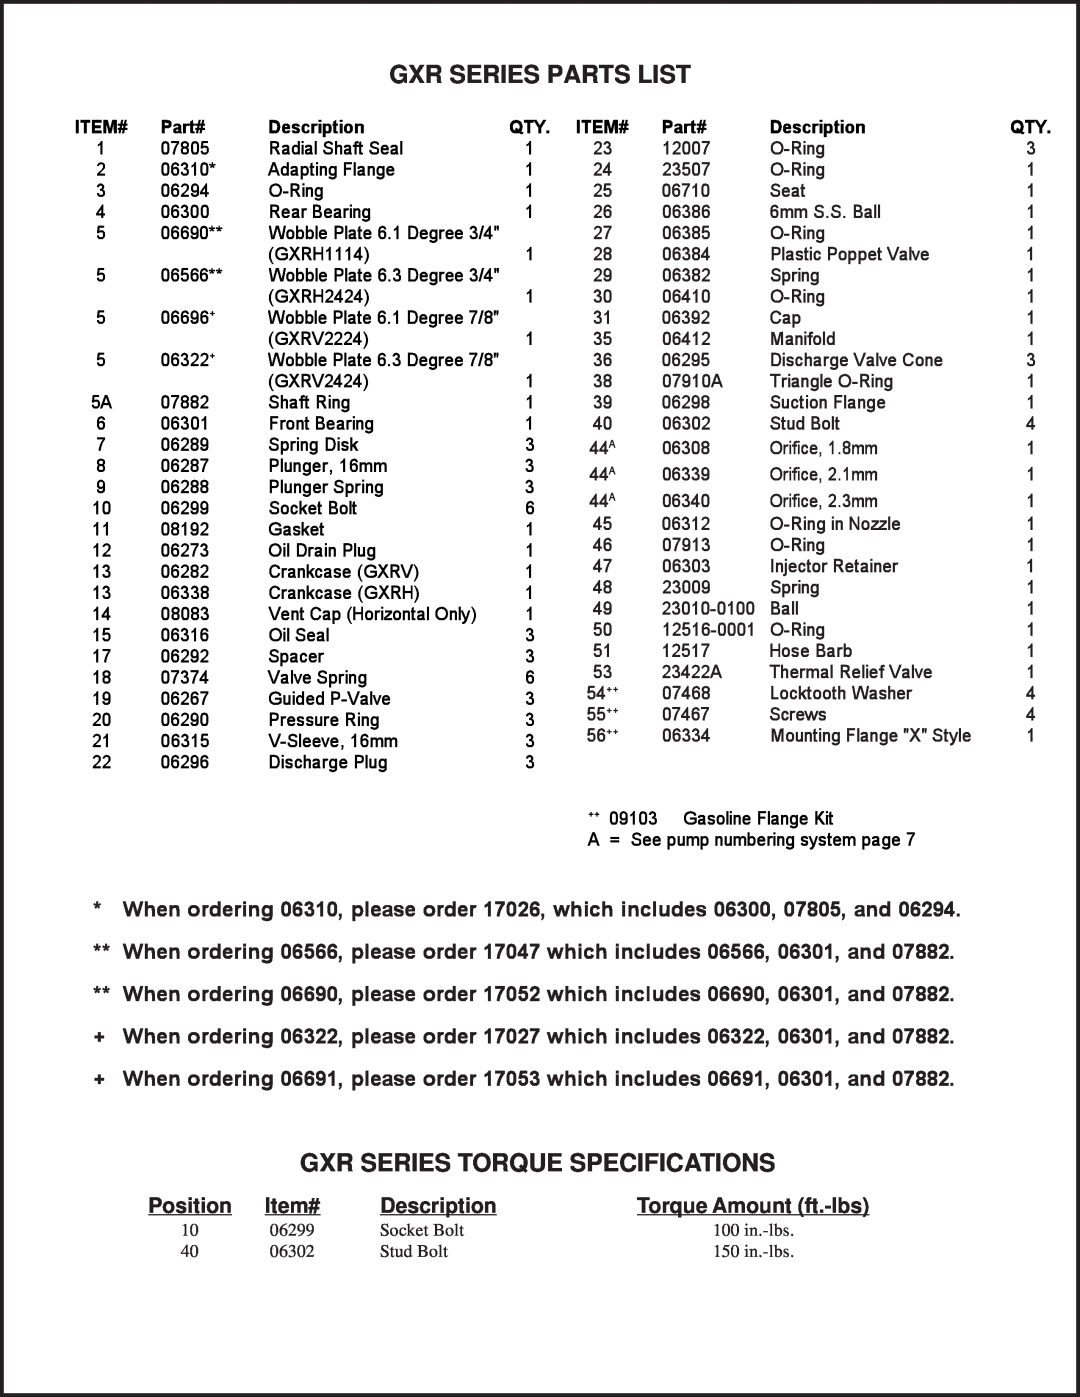 Giant GXR Gxr Series Parts List, Gxr Series Torque Specifications, Position, Item#, Description, Torque Amount ft.-lbs 